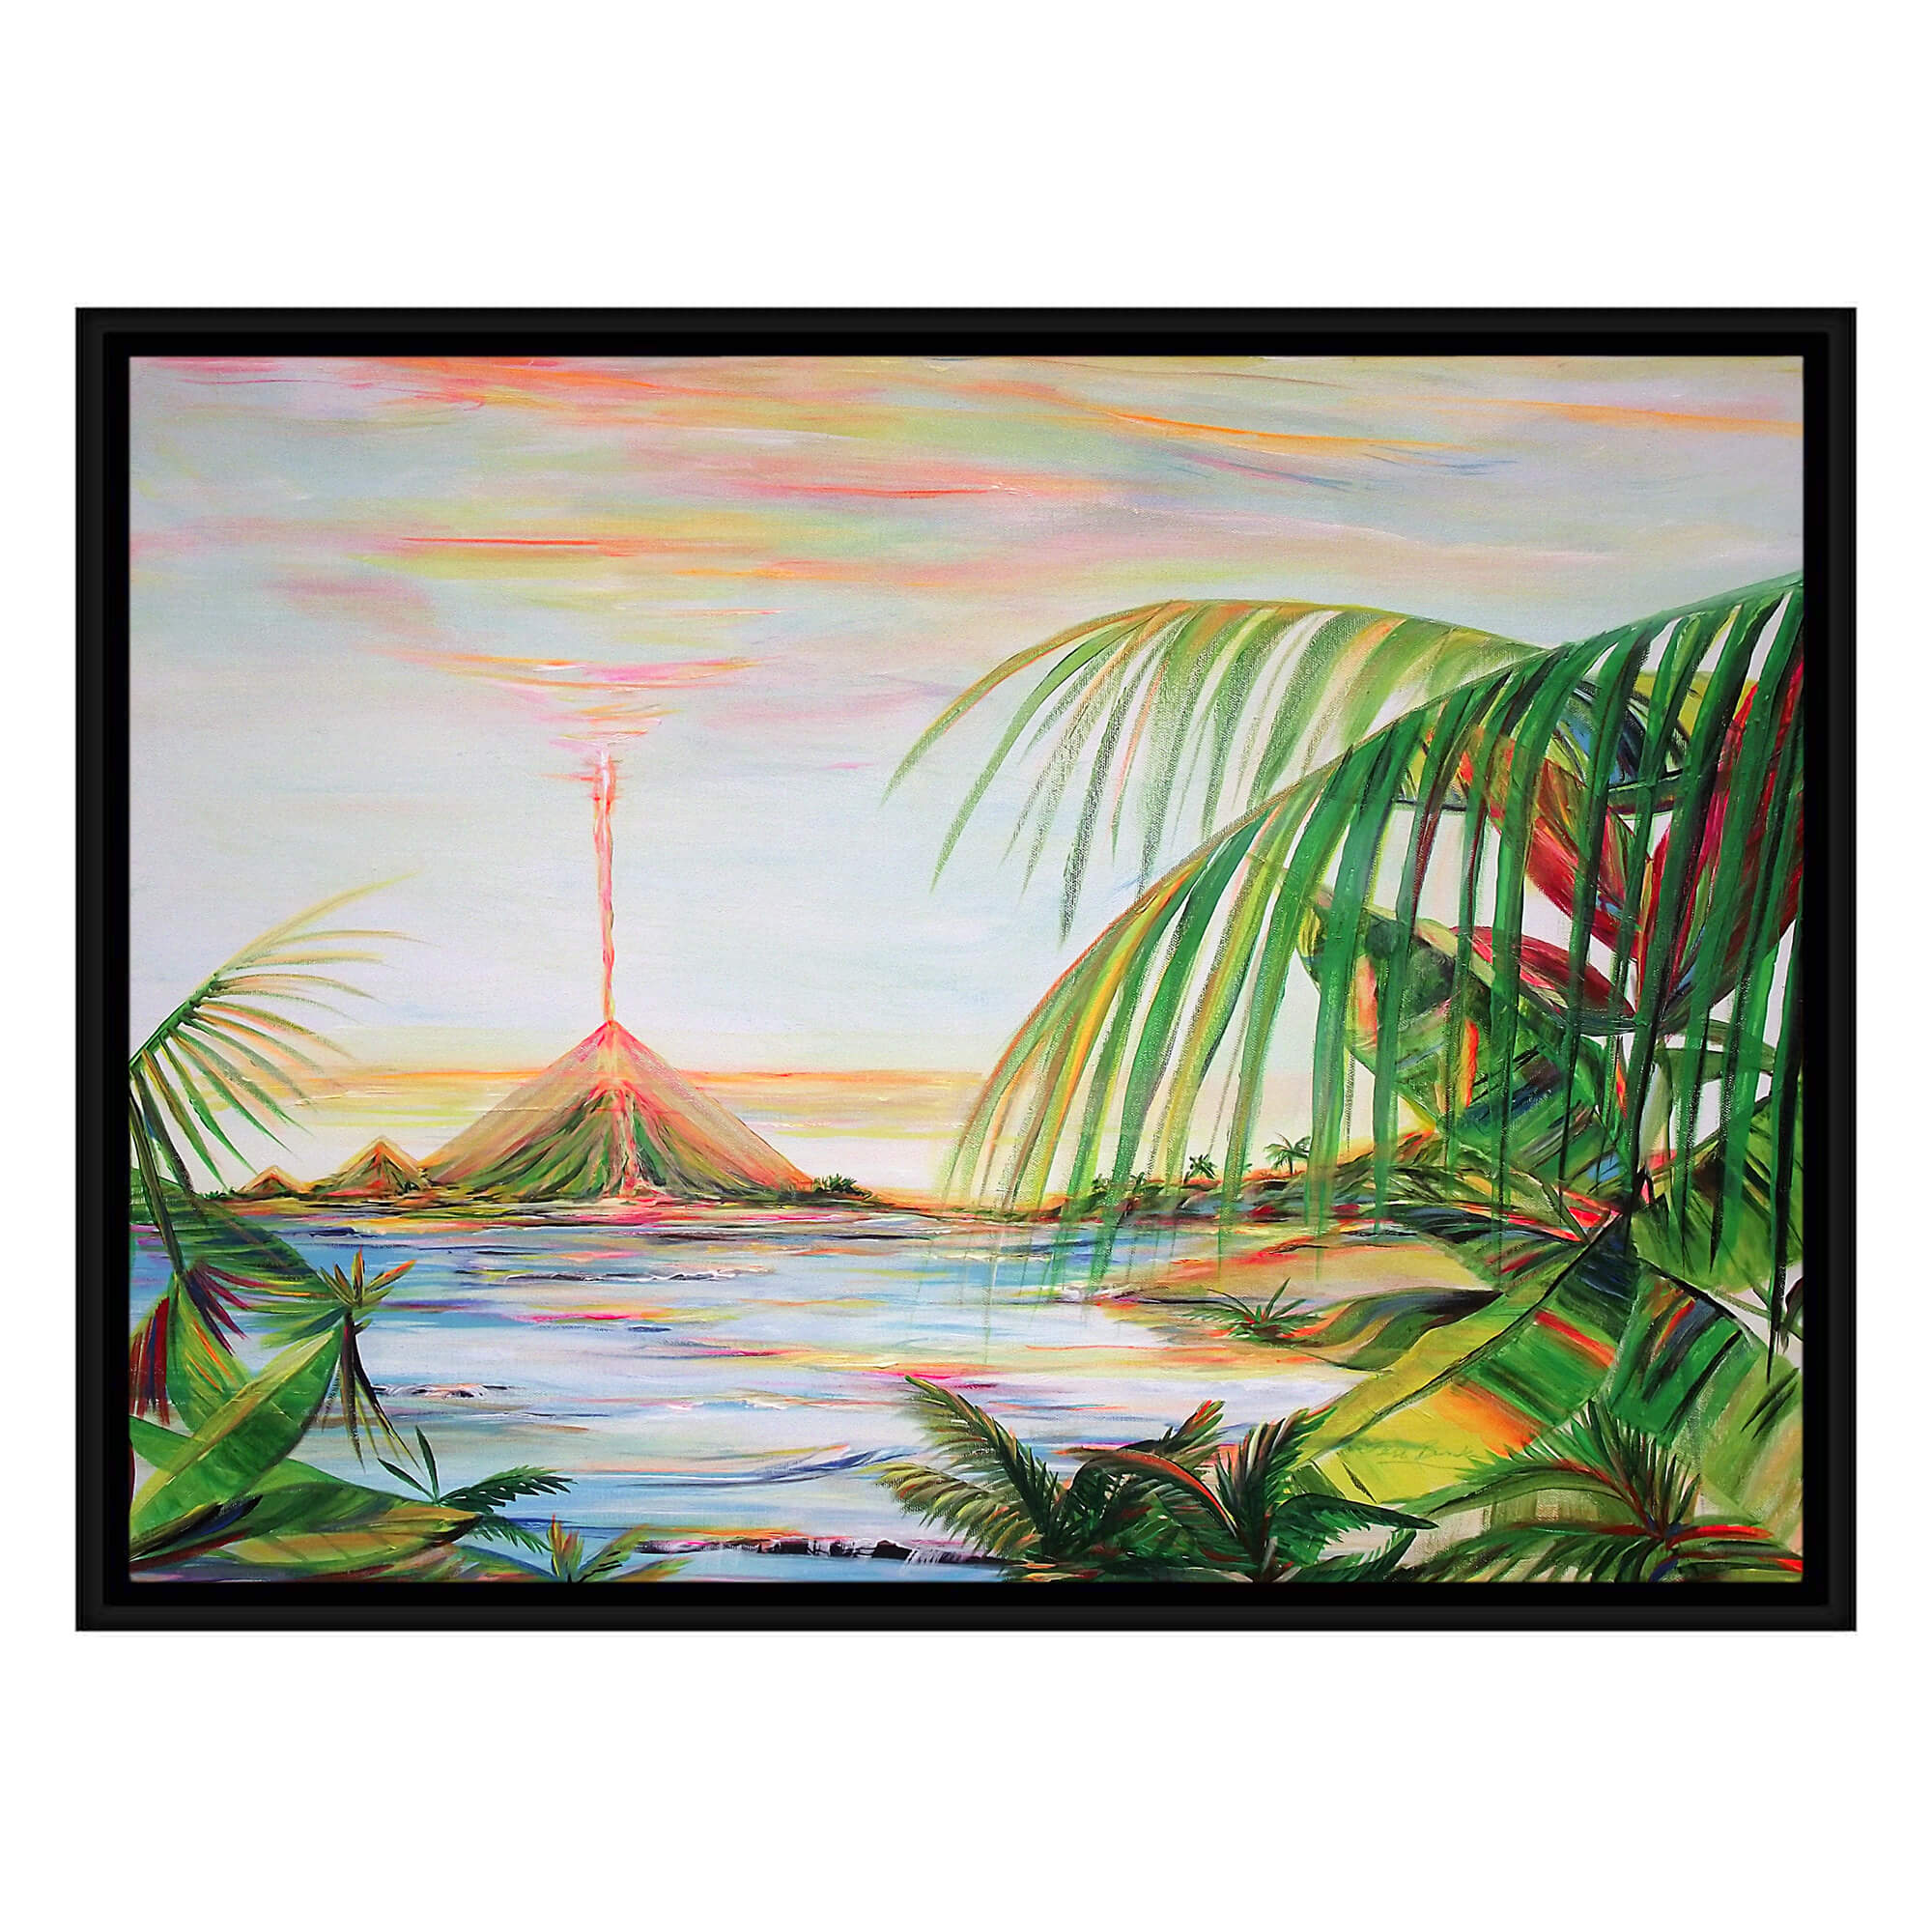 A seascape with a distant volcano by Hawaii artist Jess Burda